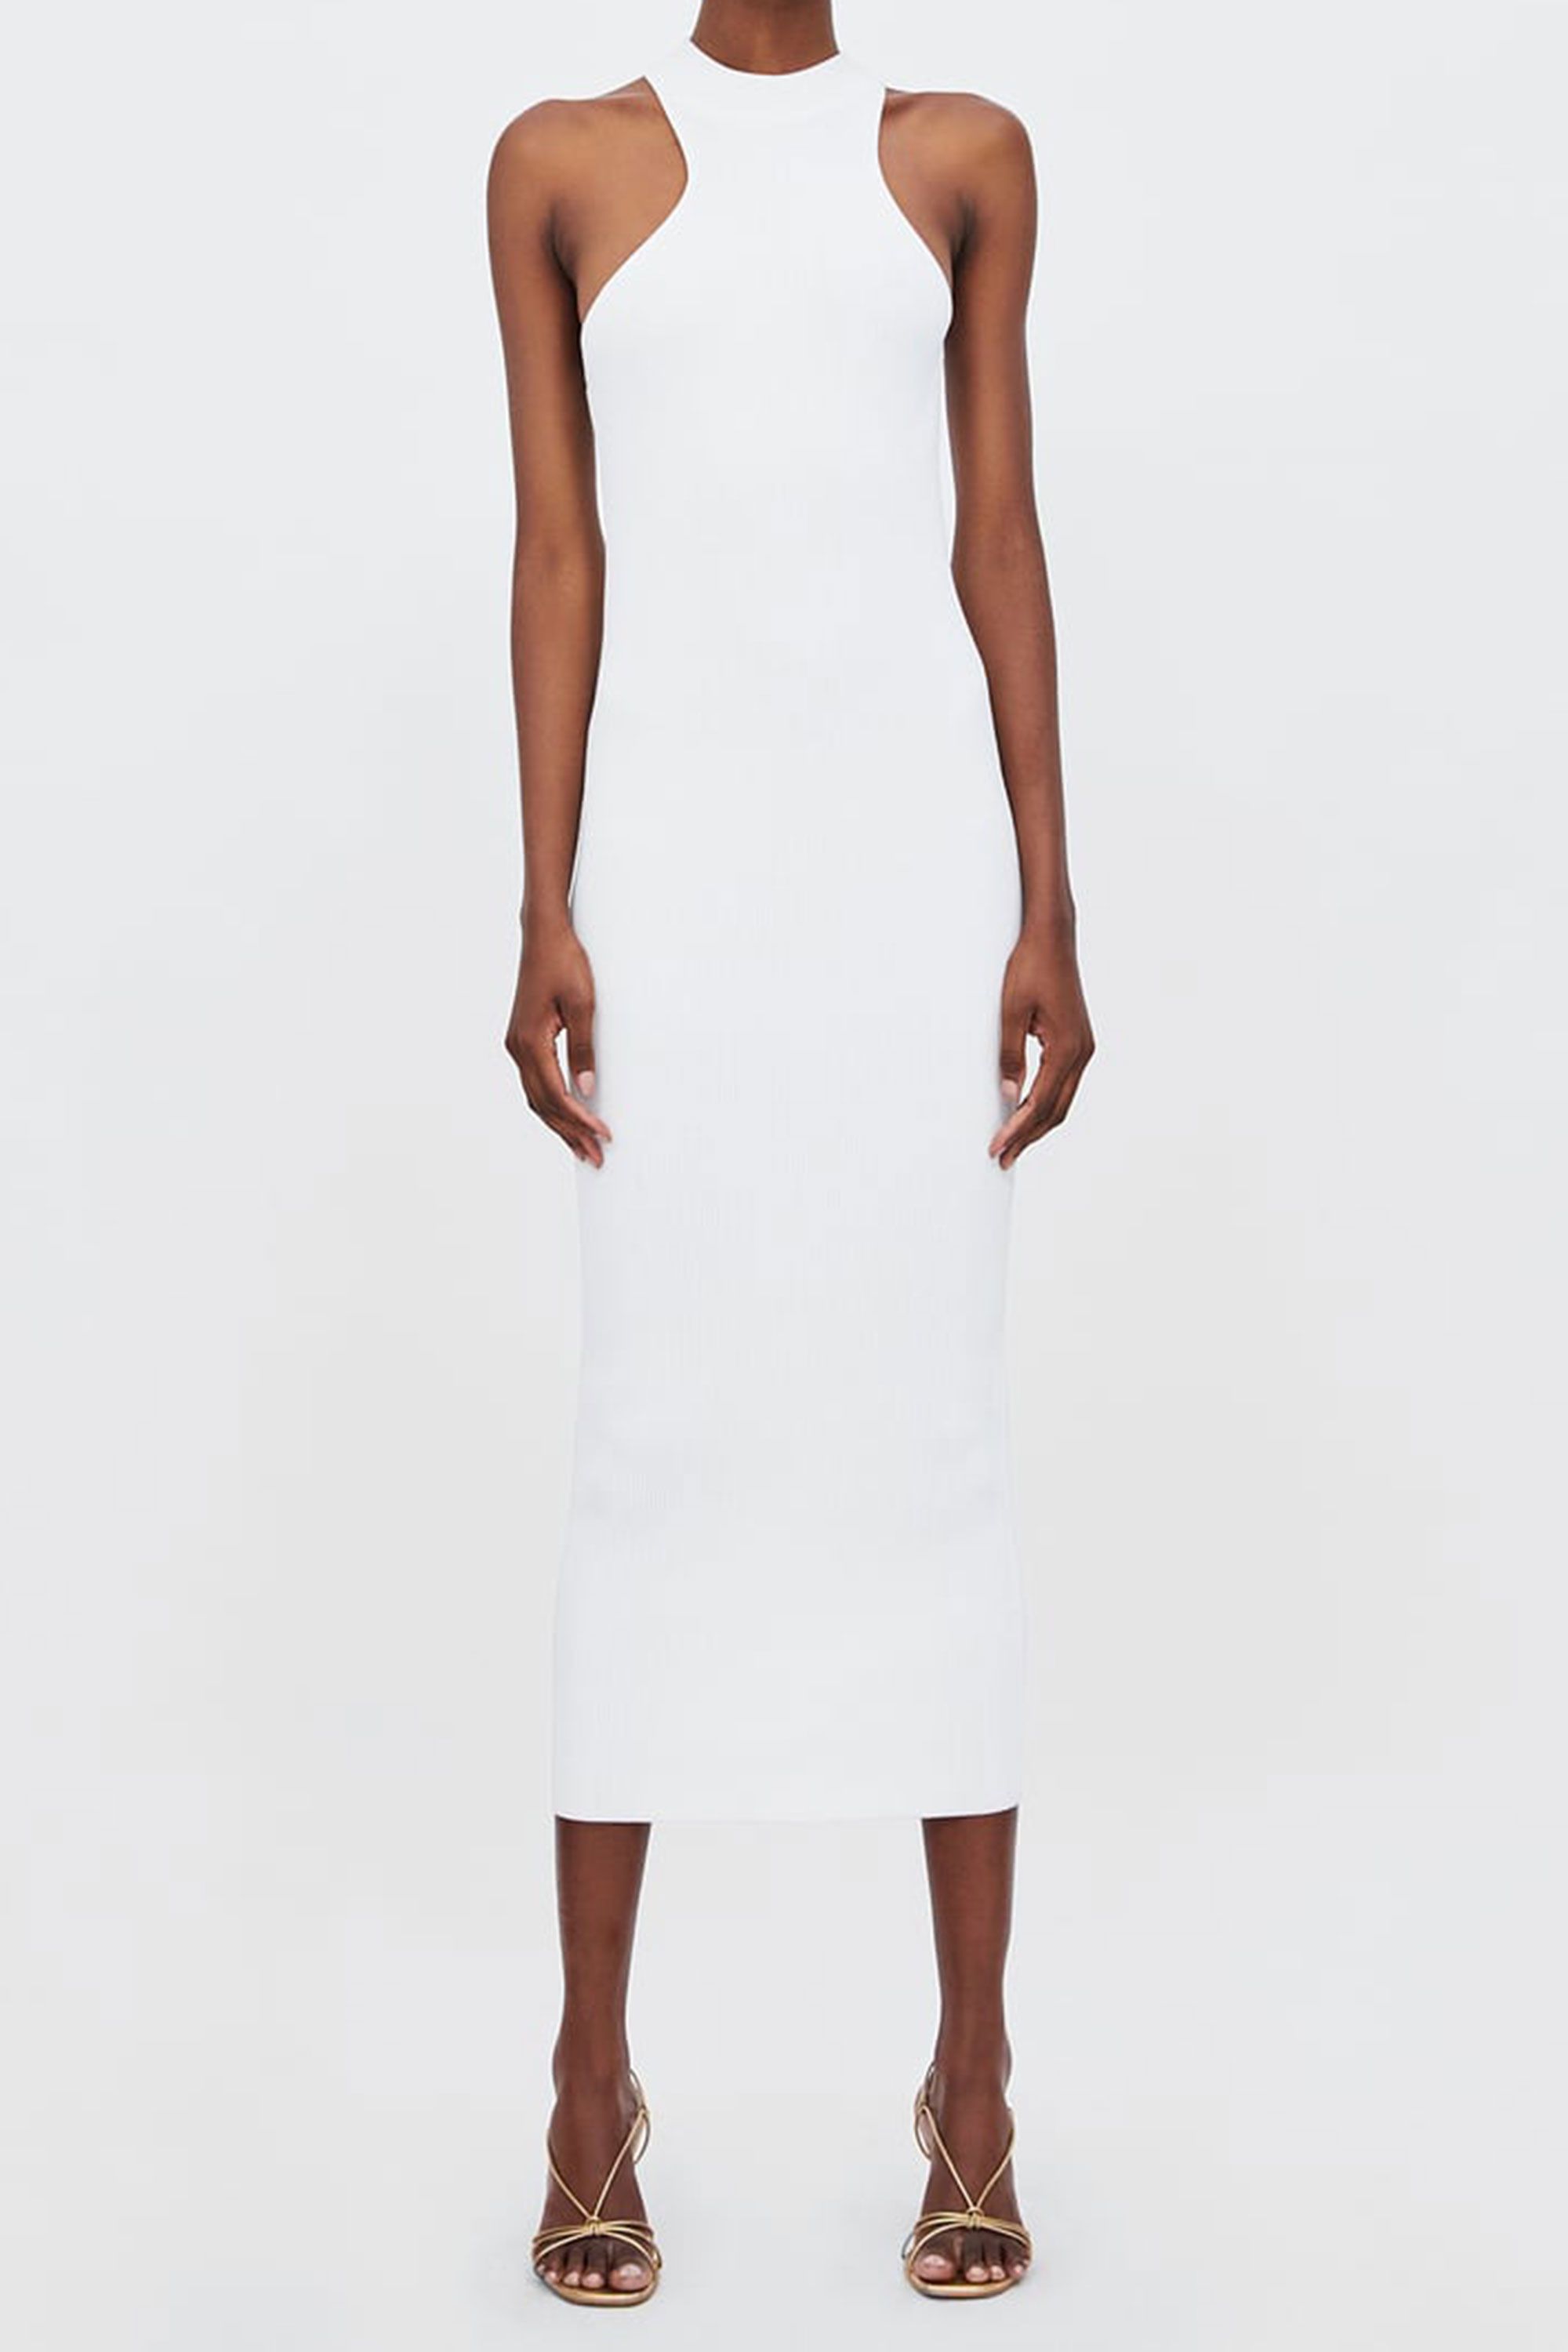 10 high-necked white dresses to buy this summer – White dresses